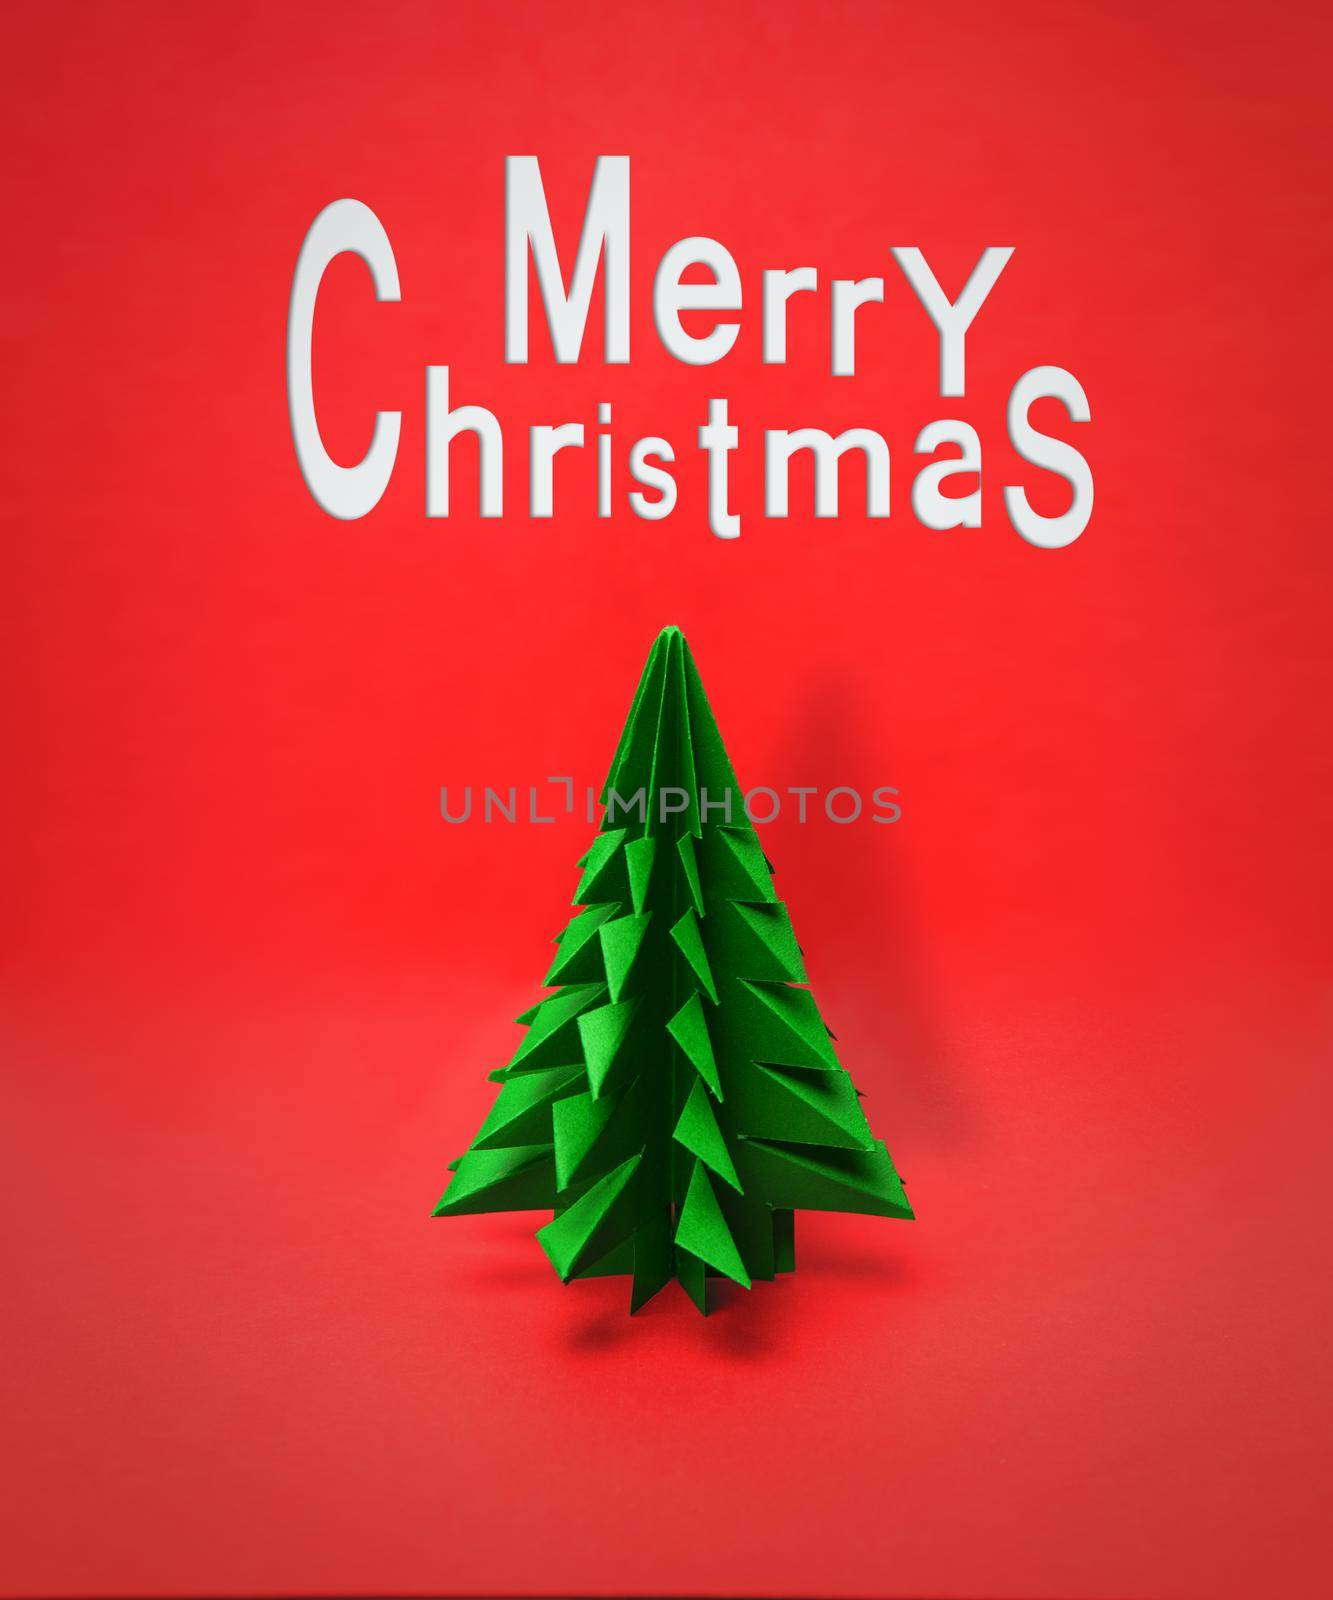 Small Christmas tree by alexAleksei